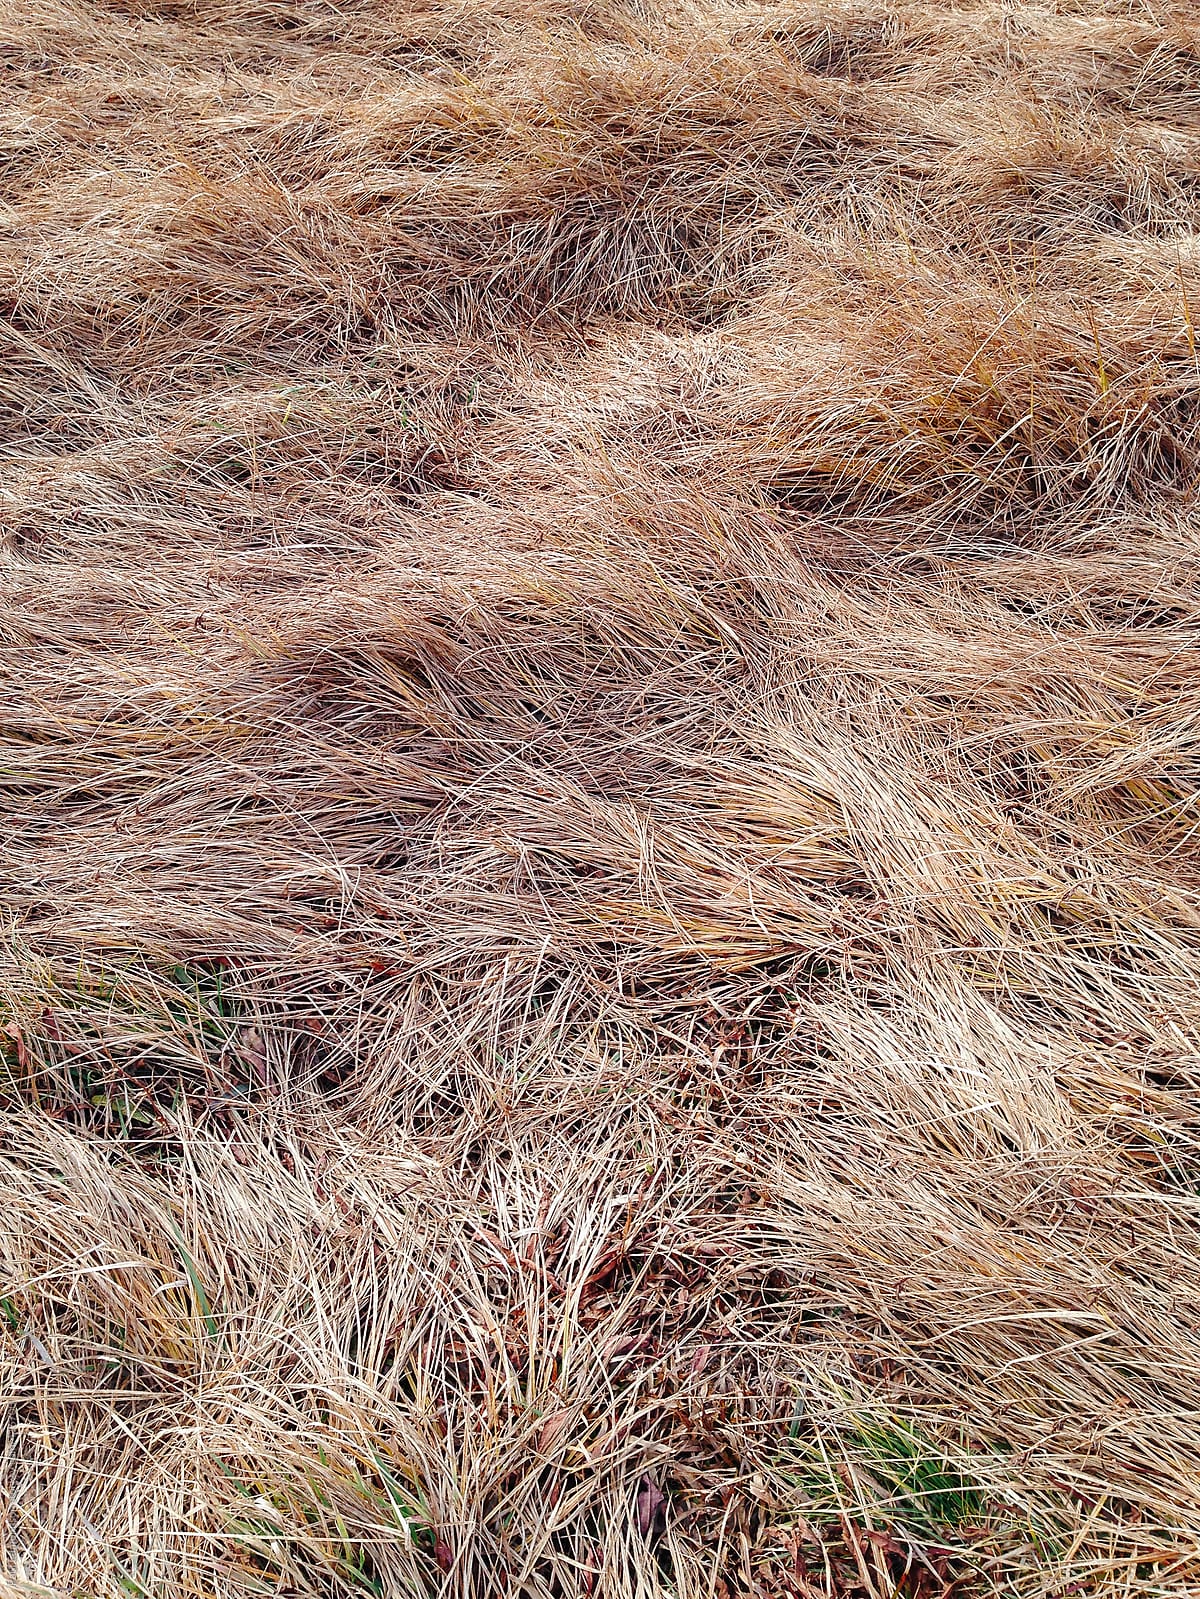 Windswept grasses in alpine meadow